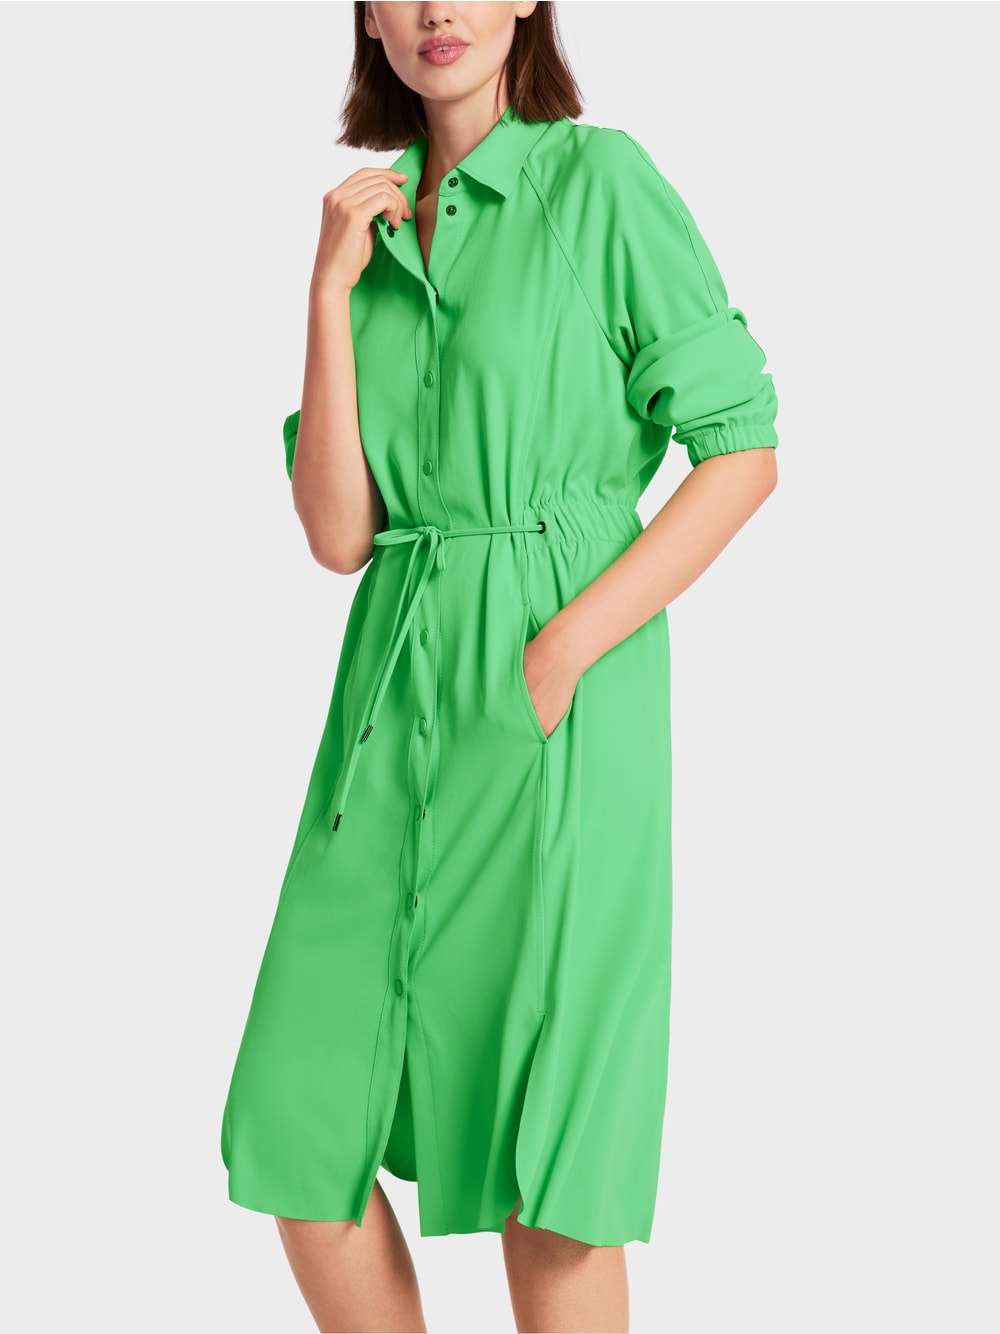 Marc Cain New Neon Green Shirt blouse dress with raglan